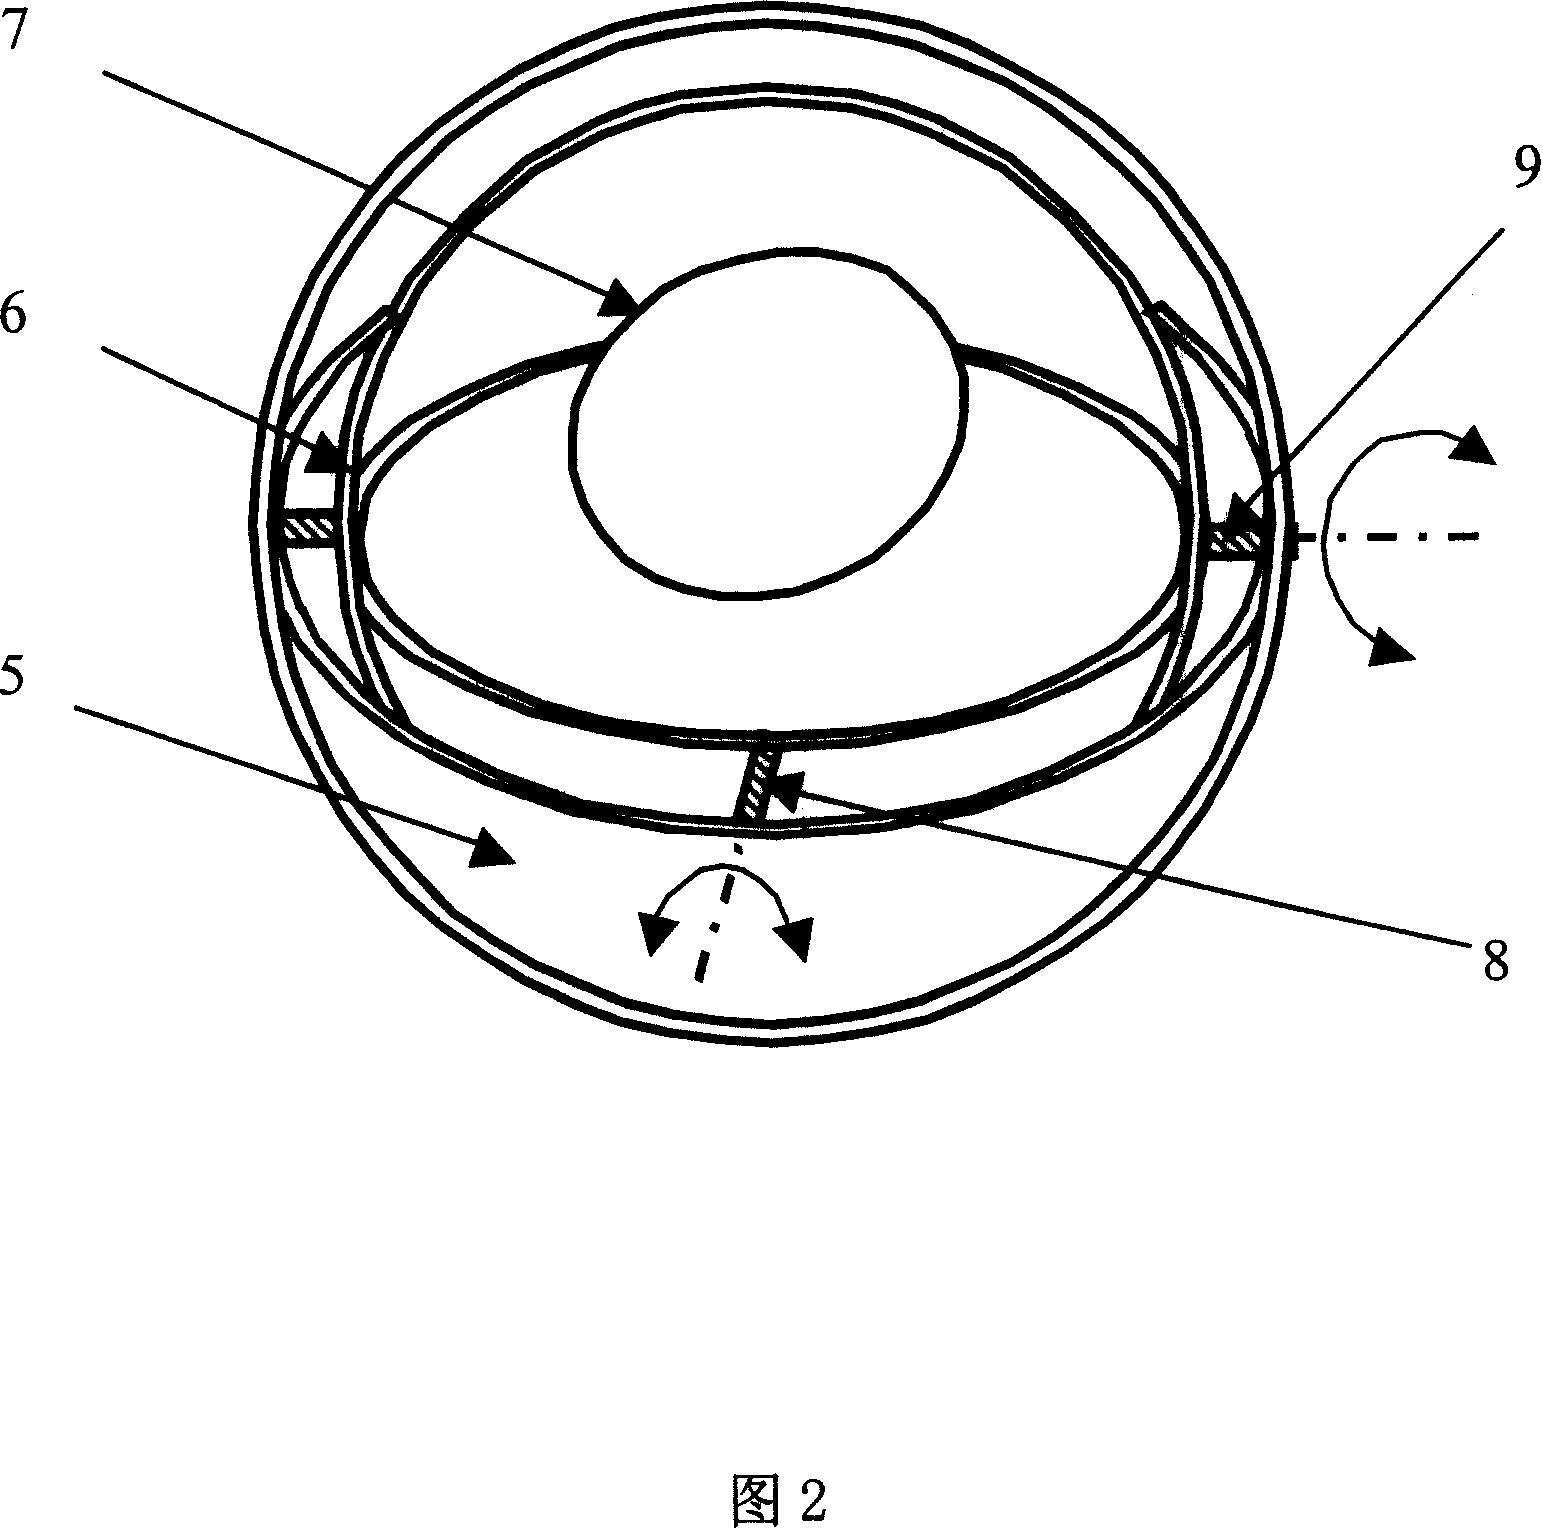 Rotation-ball washing machine and method